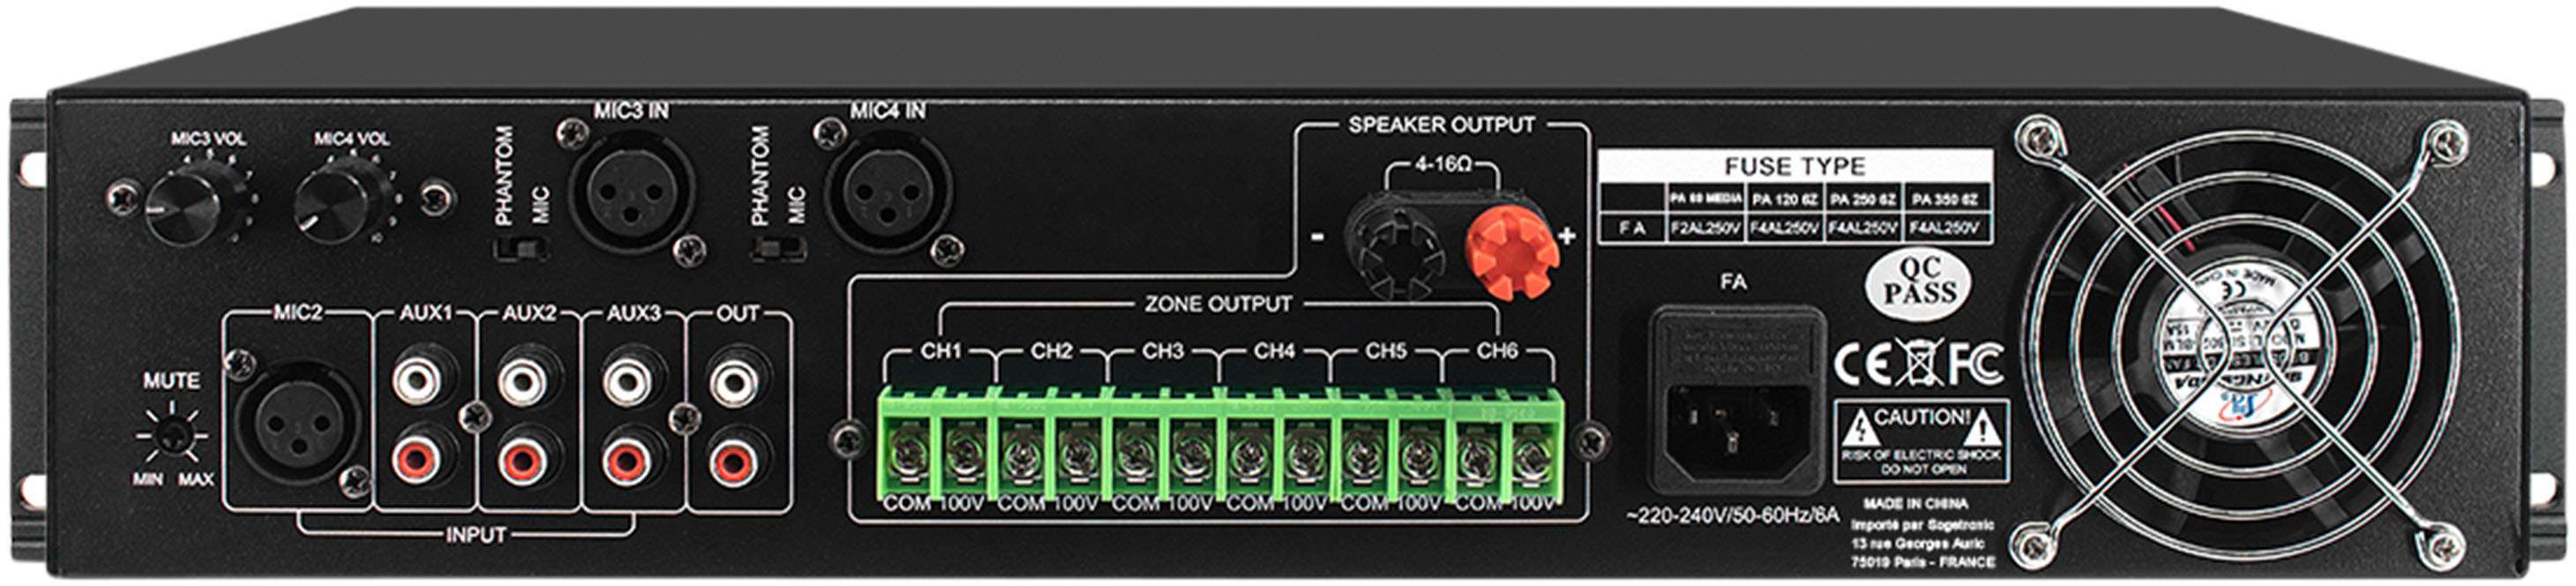 Definitive Audio Pa 250 6z - Multiple channels power amplifier - Variation 1